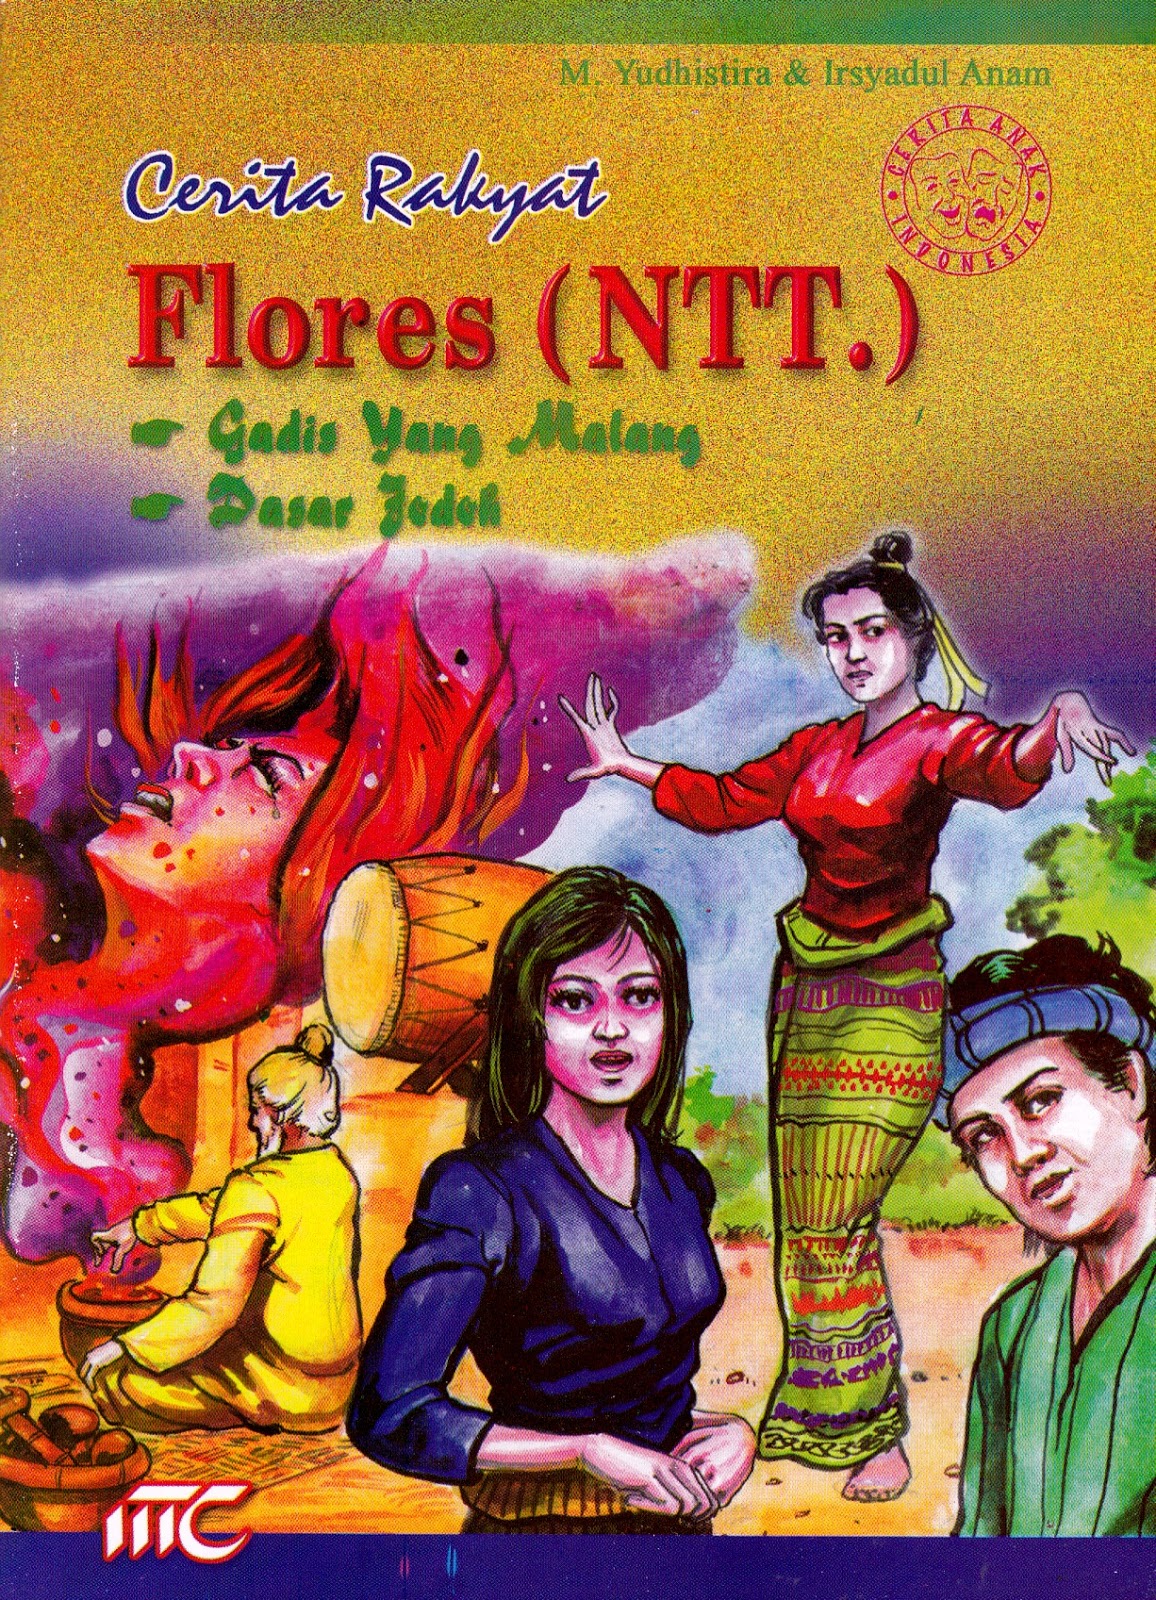 Toko Buku Online Daon Lontar: Cerita Rakyat Flores (NTT.)